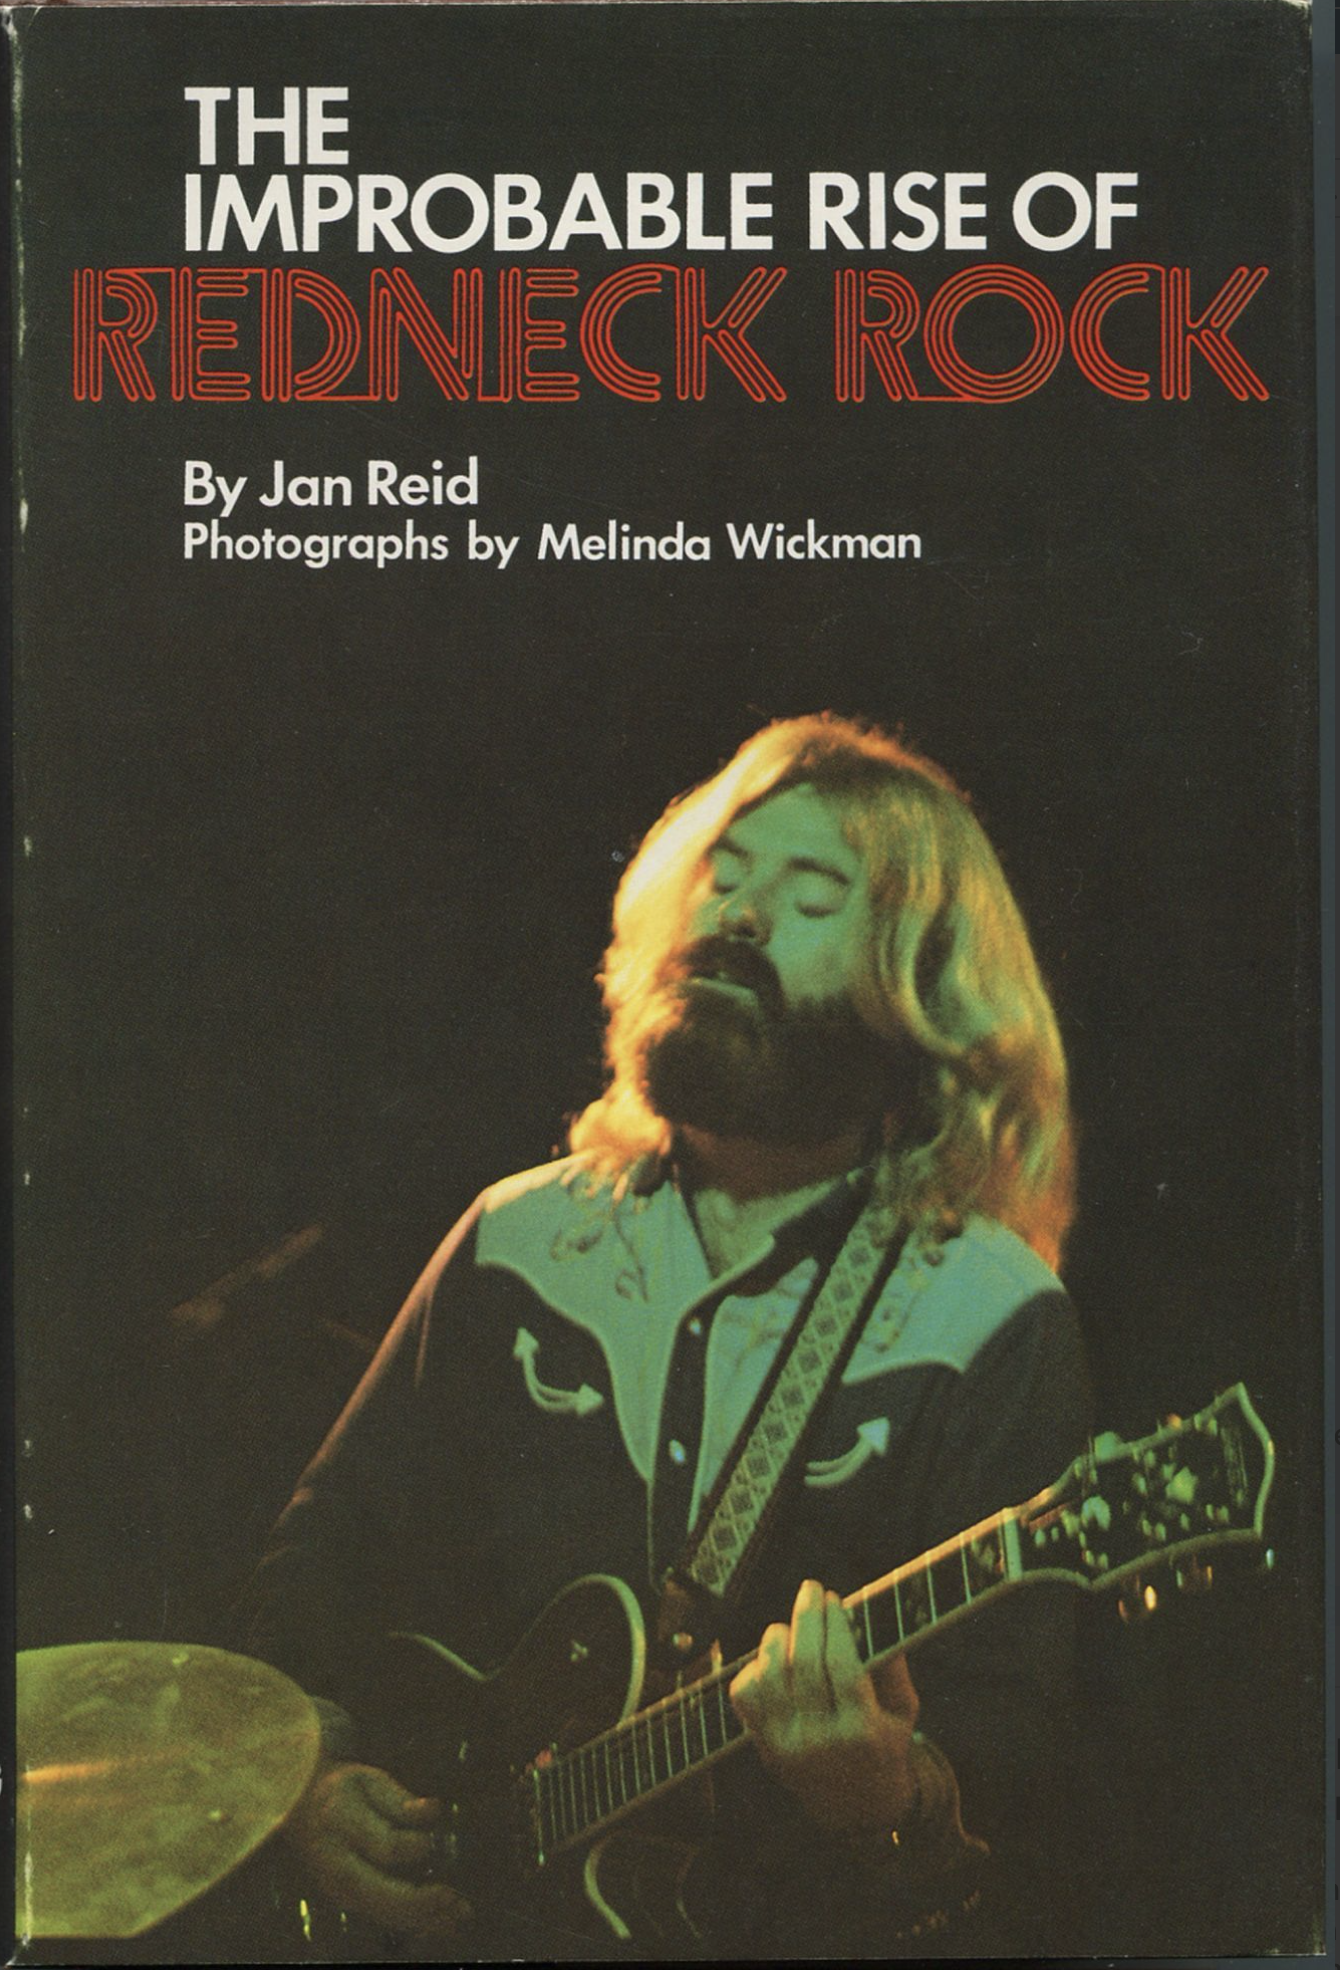 Improbable Rise of Redneck Rock, 1974